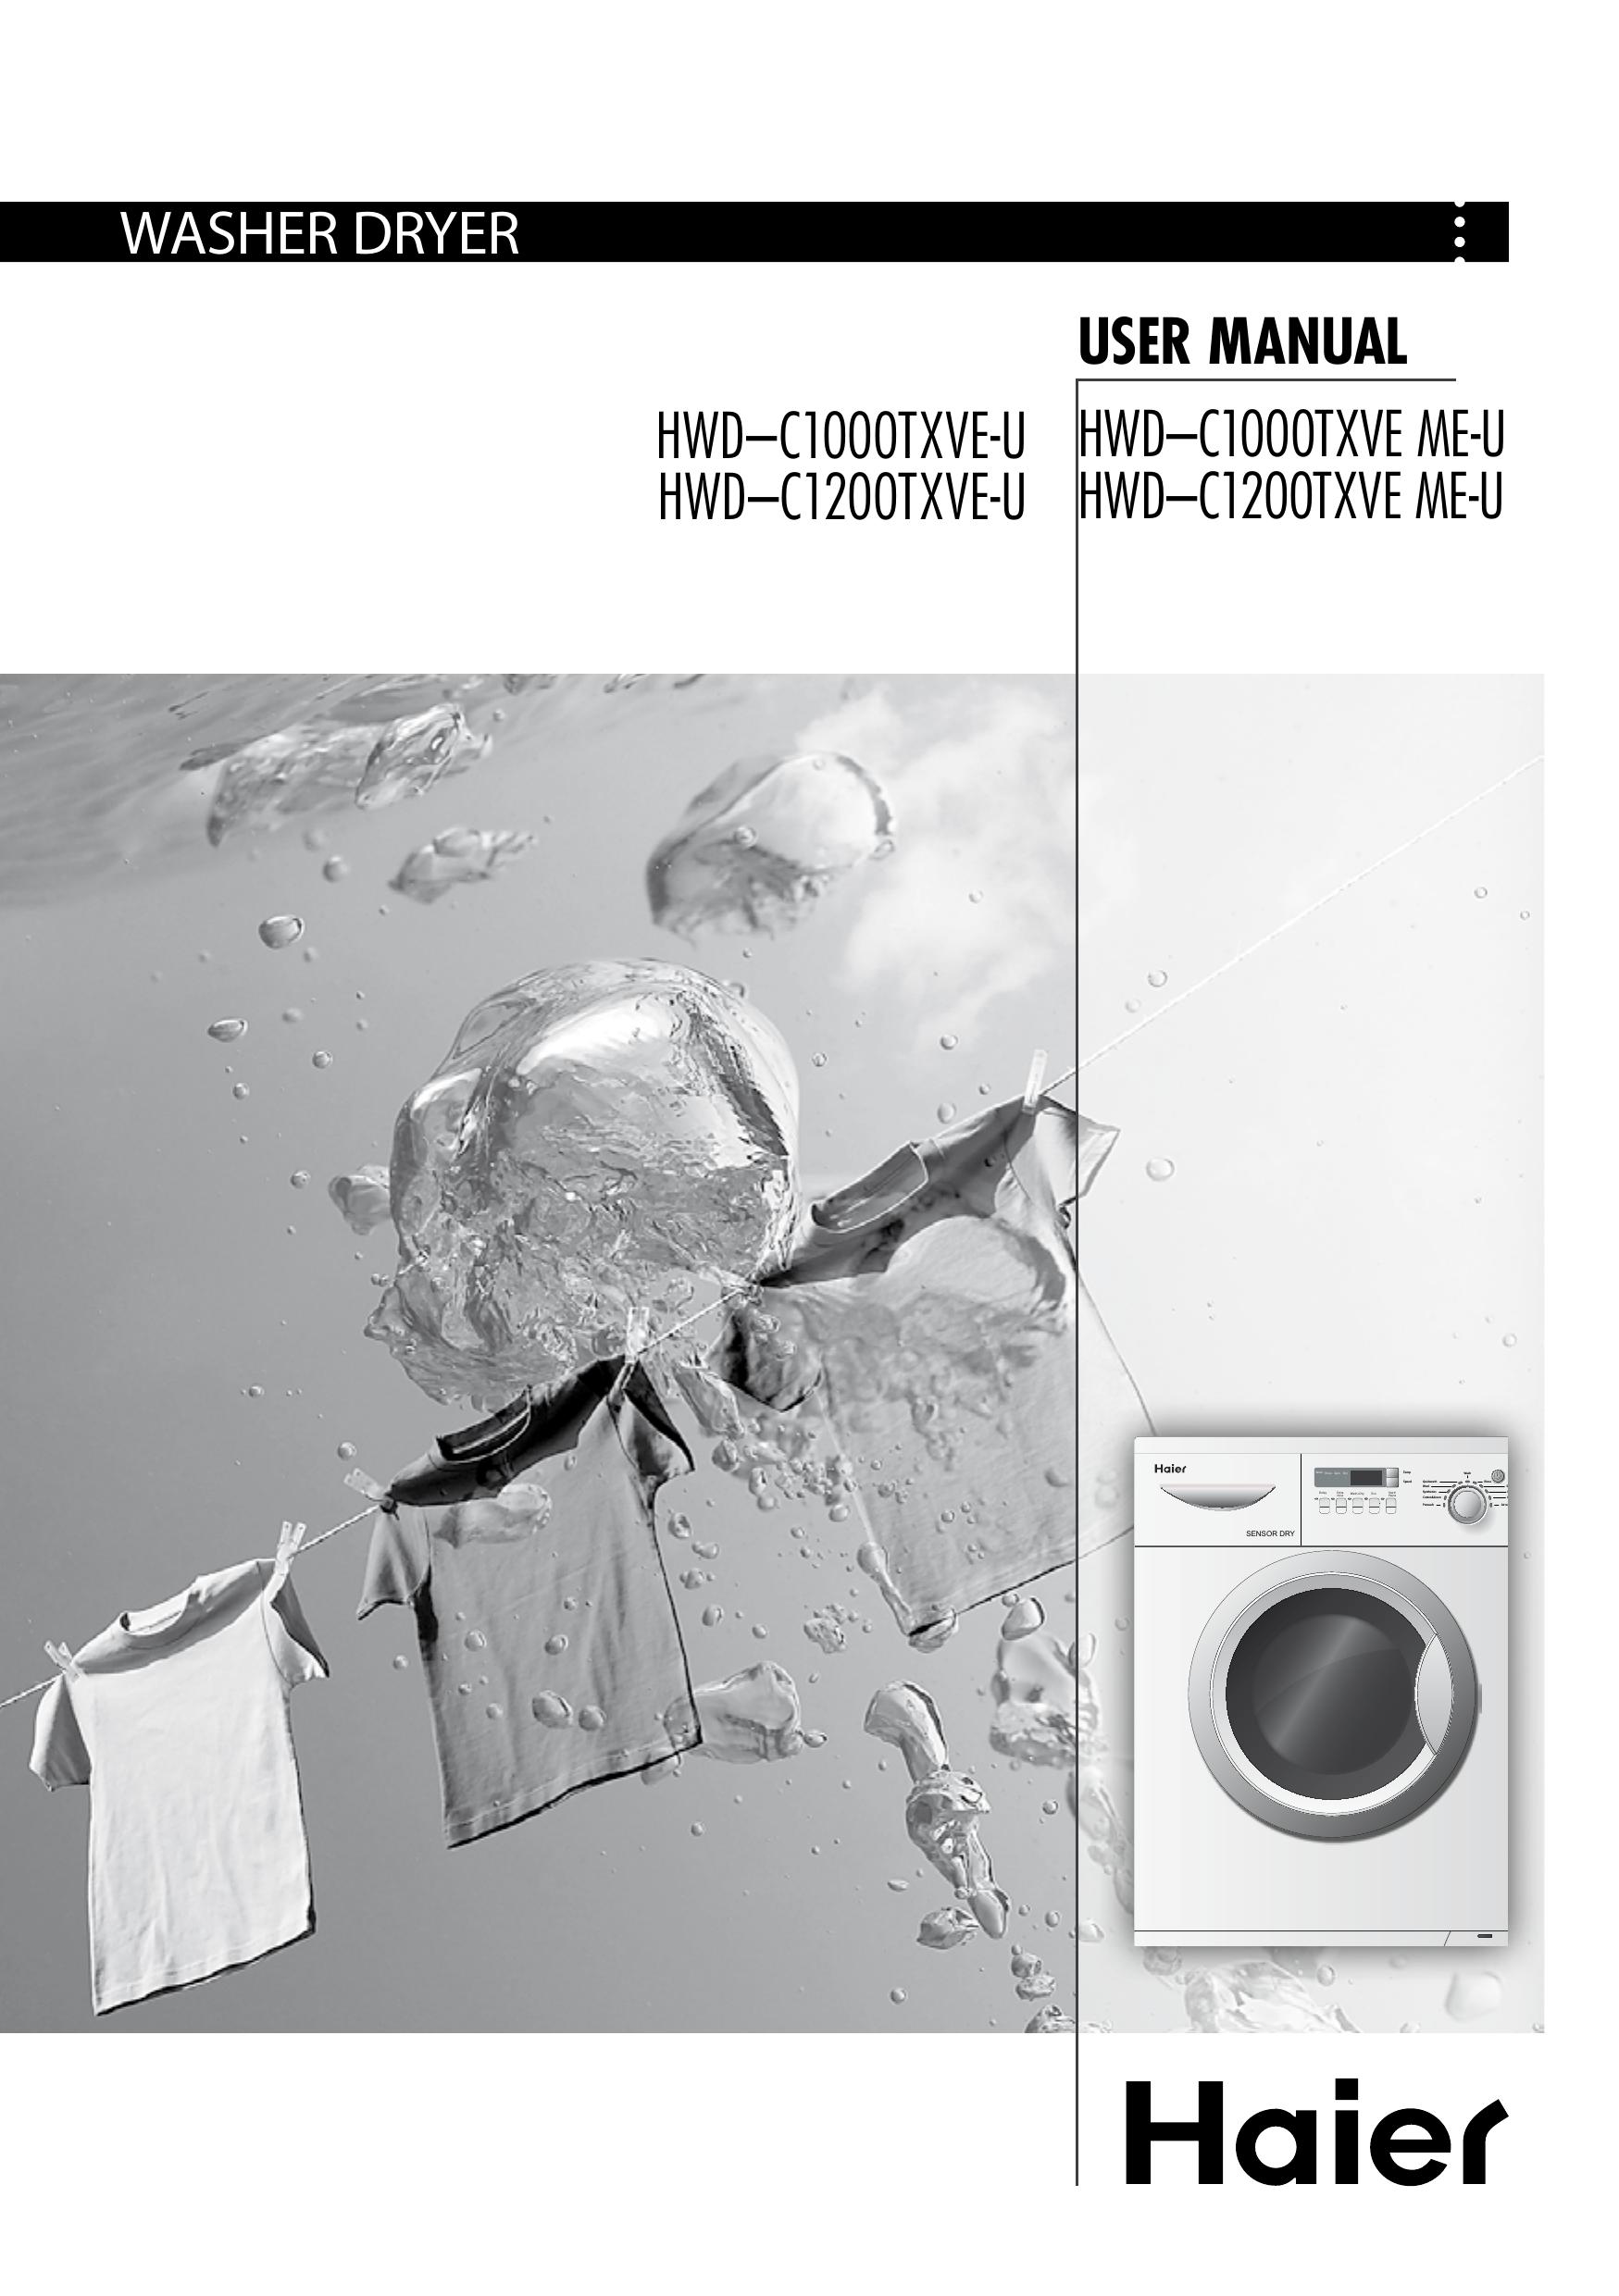 Haier HWDC1000TXVE-U Washer/Dryer User Manual